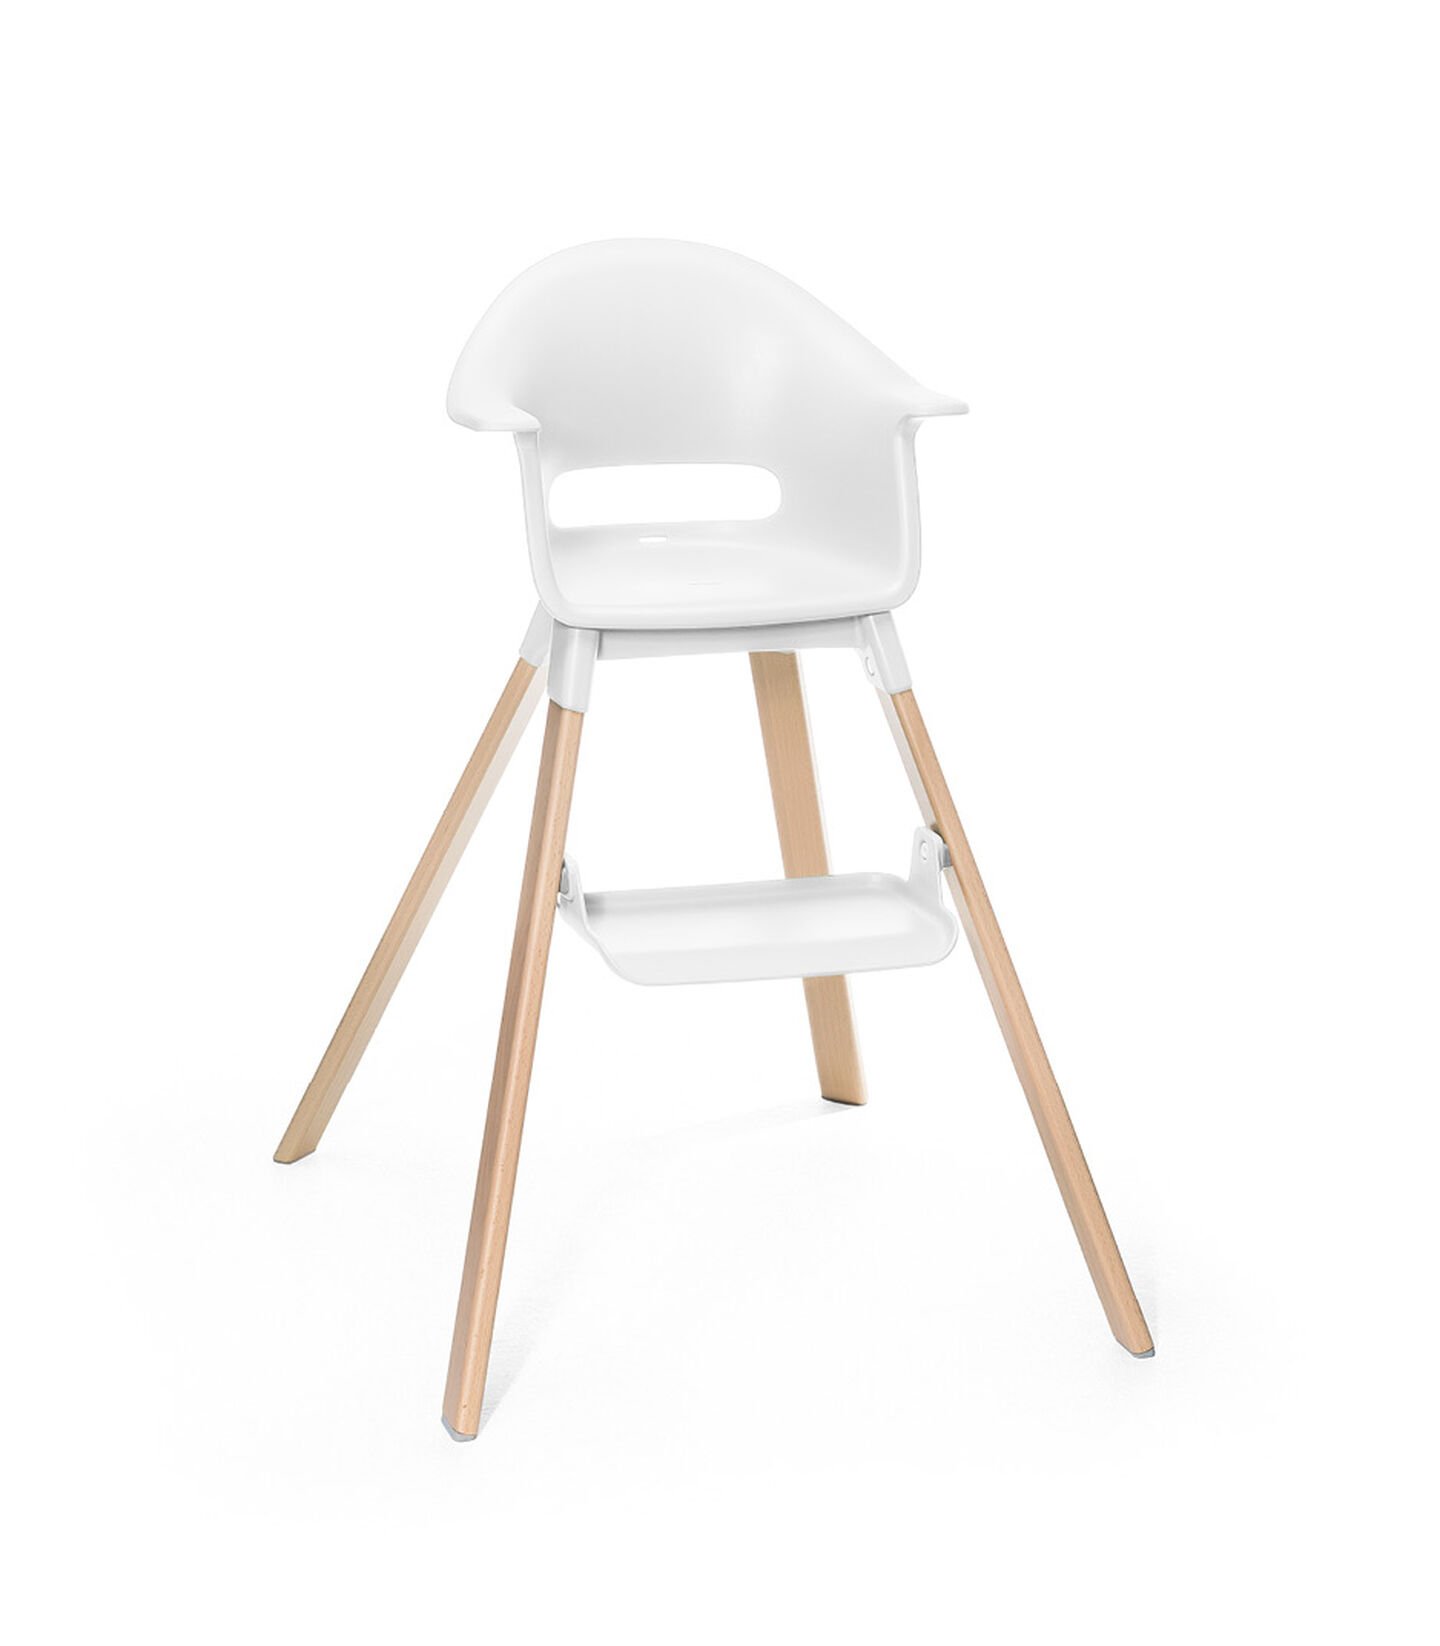 Stokke® Clikk™ High Chair White, White, mainview view 3